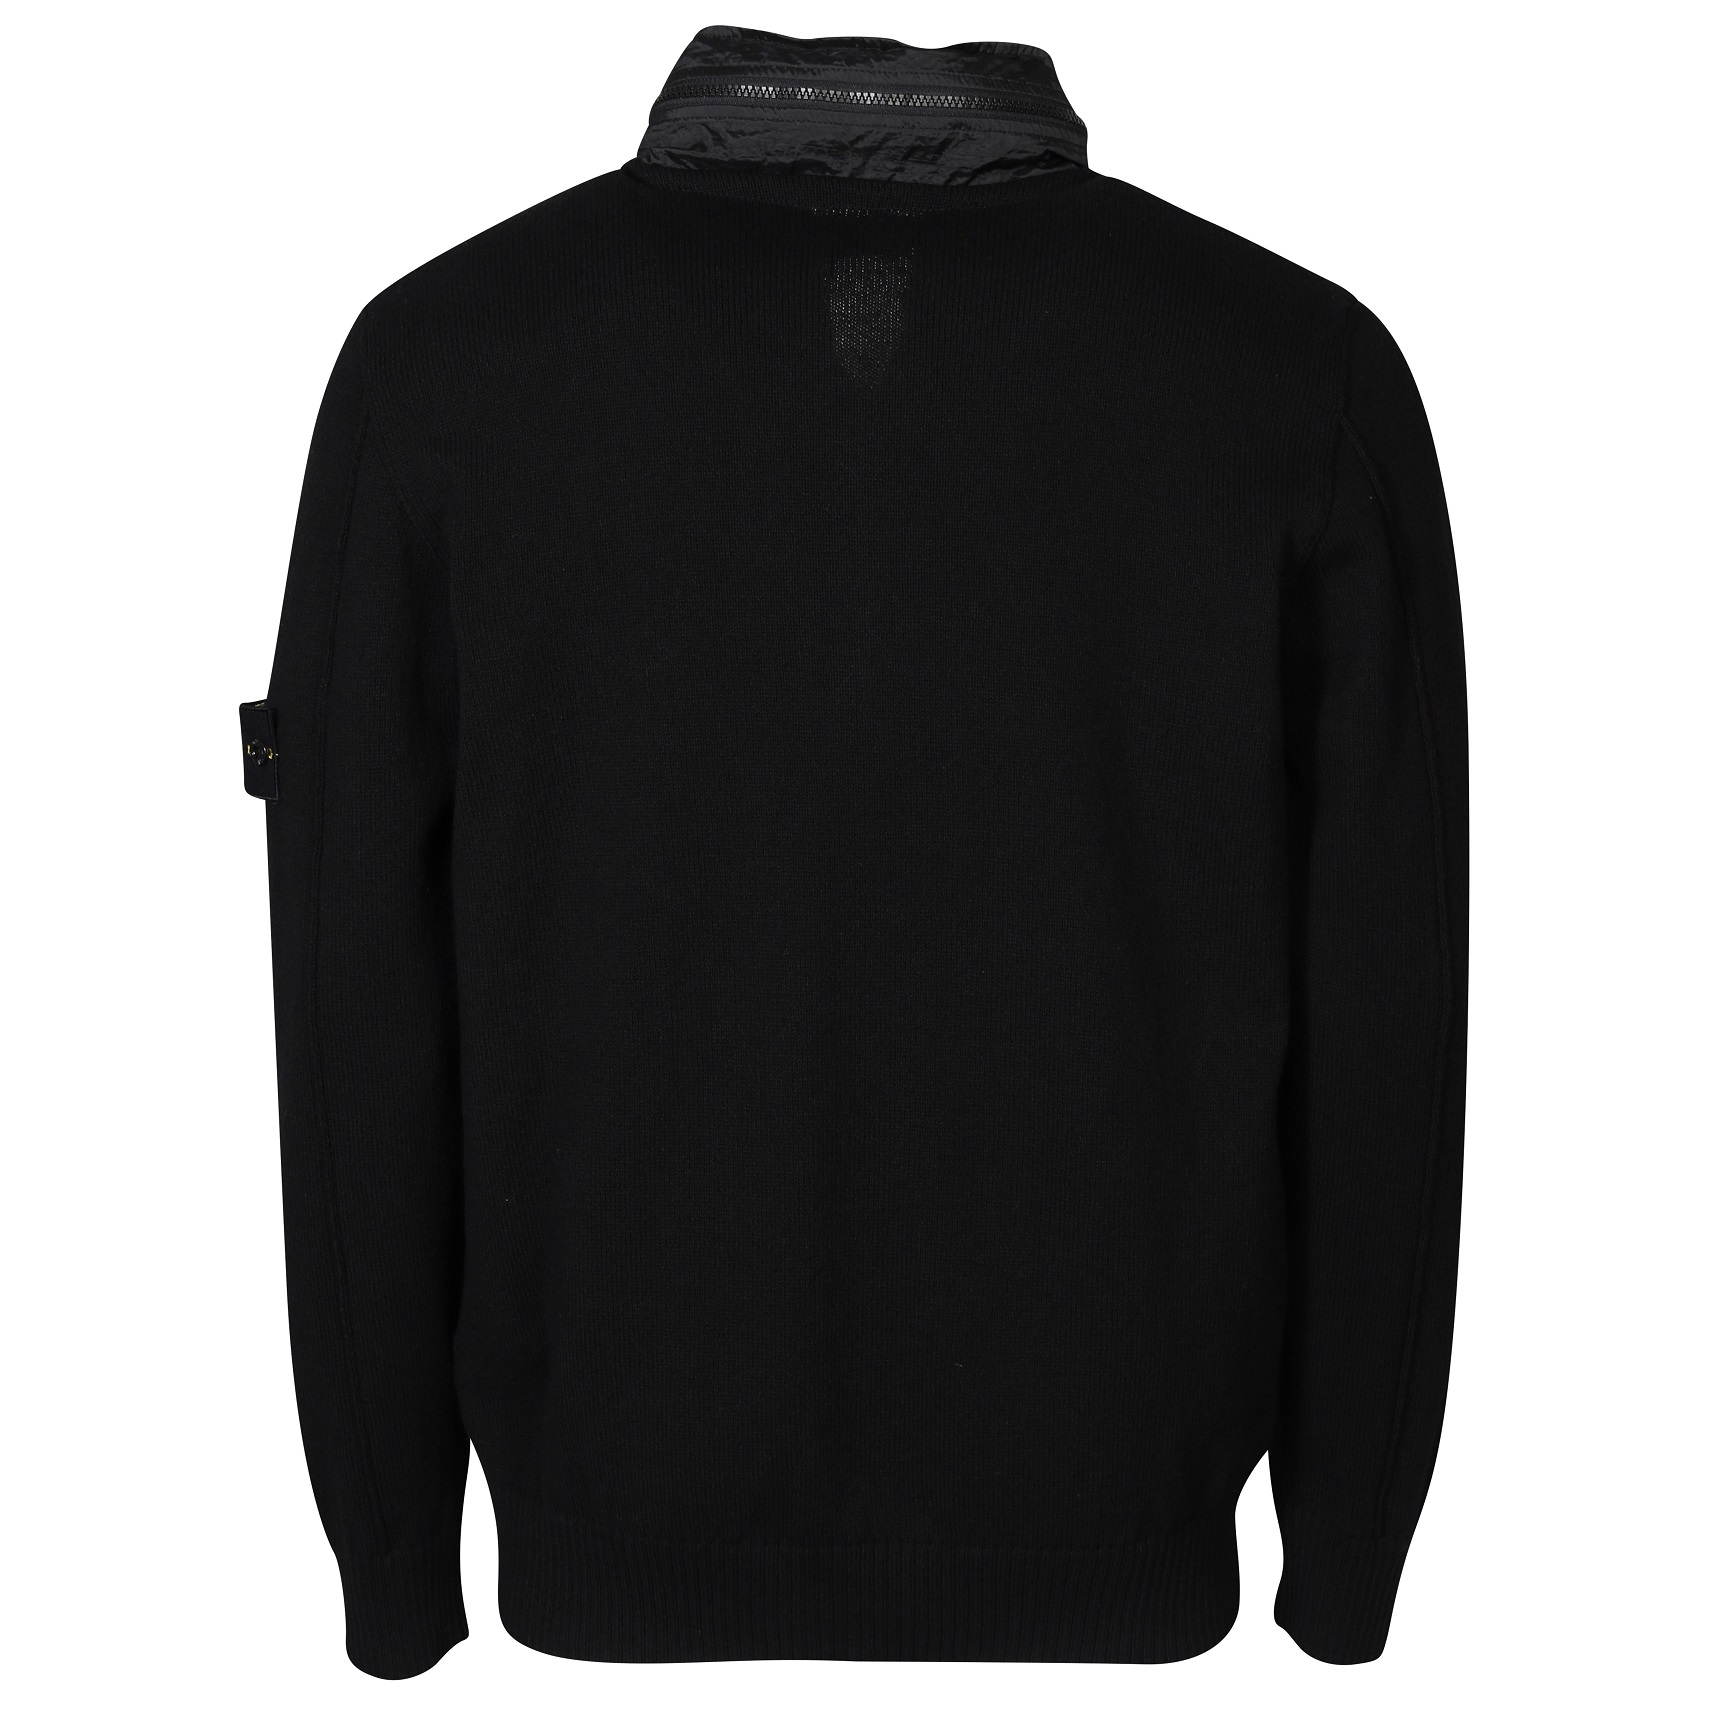 STONE ISLAND Cotton Knit Zip Jacket in Black XL